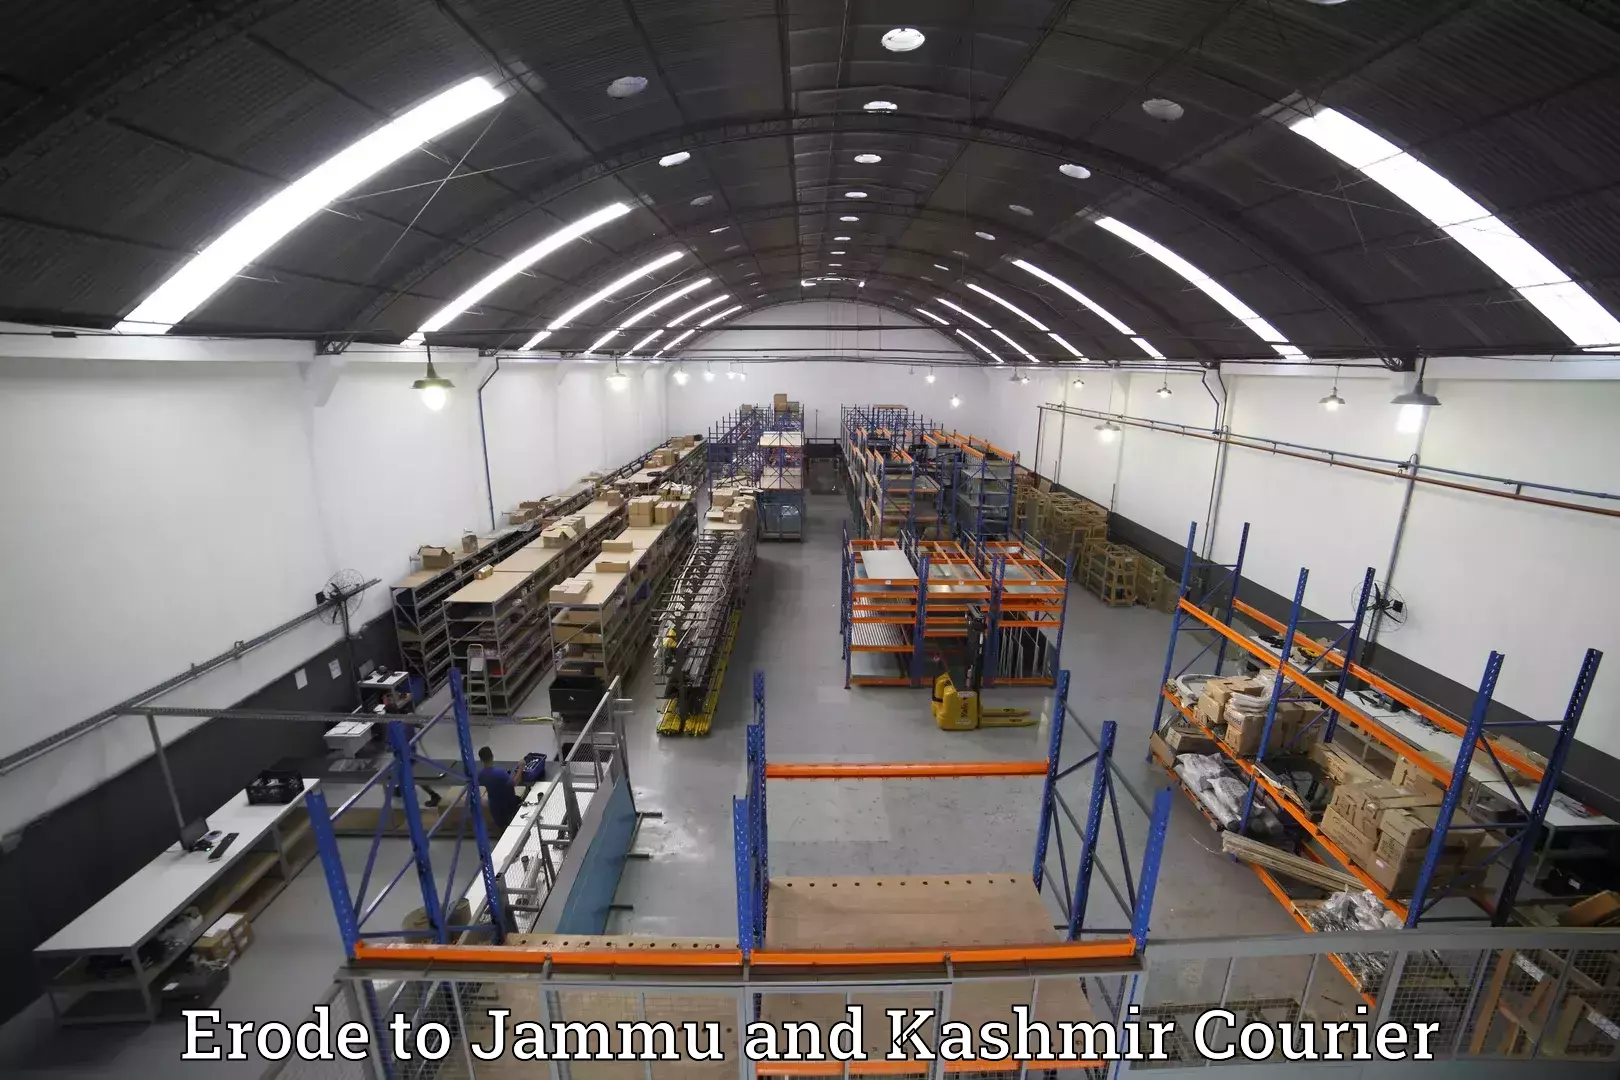 Baggage transport network Erode to Jammu and Kashmir